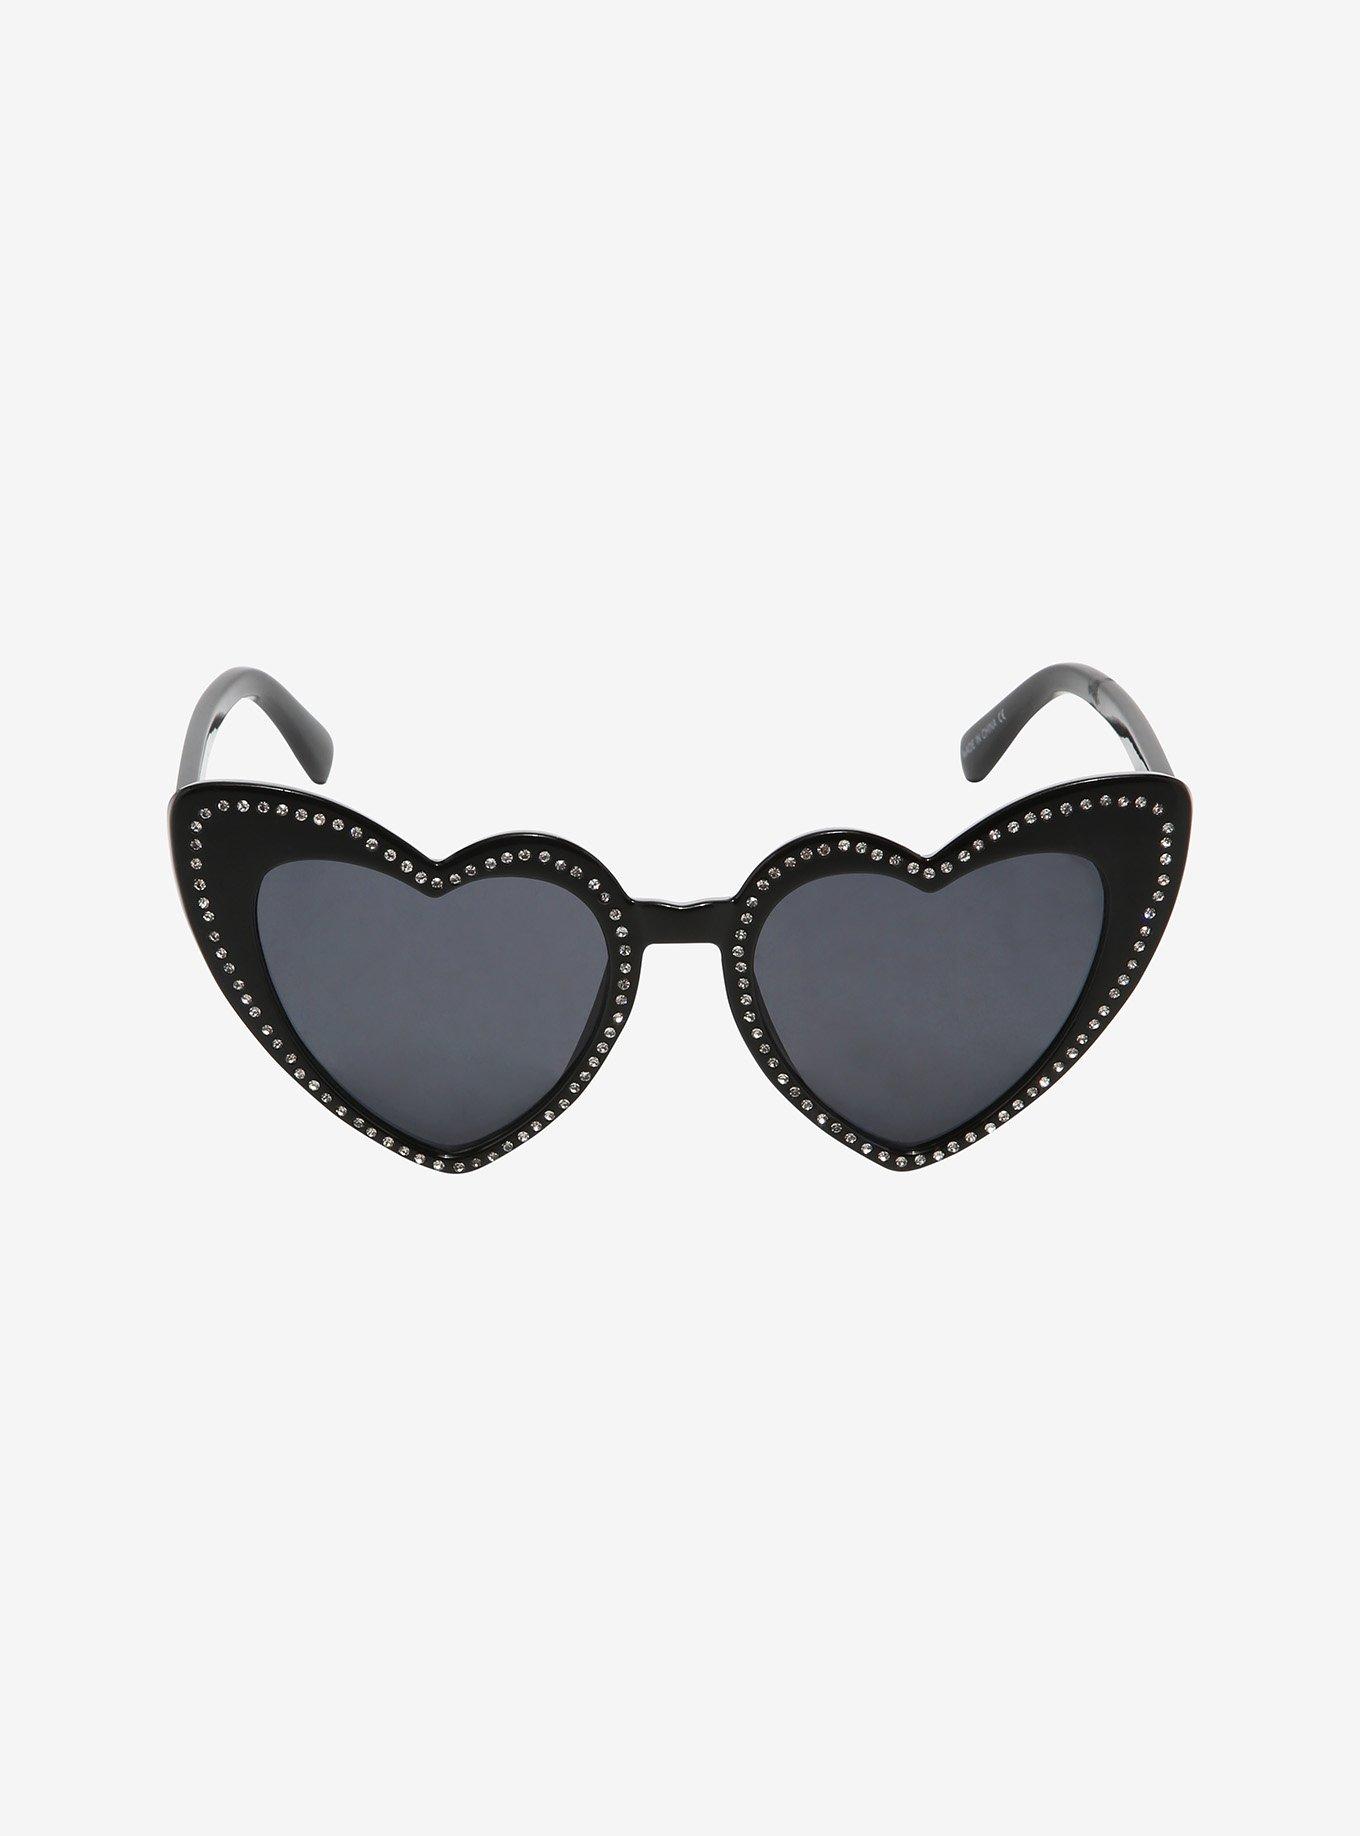 Black Rhinstone Heart Sunglasses